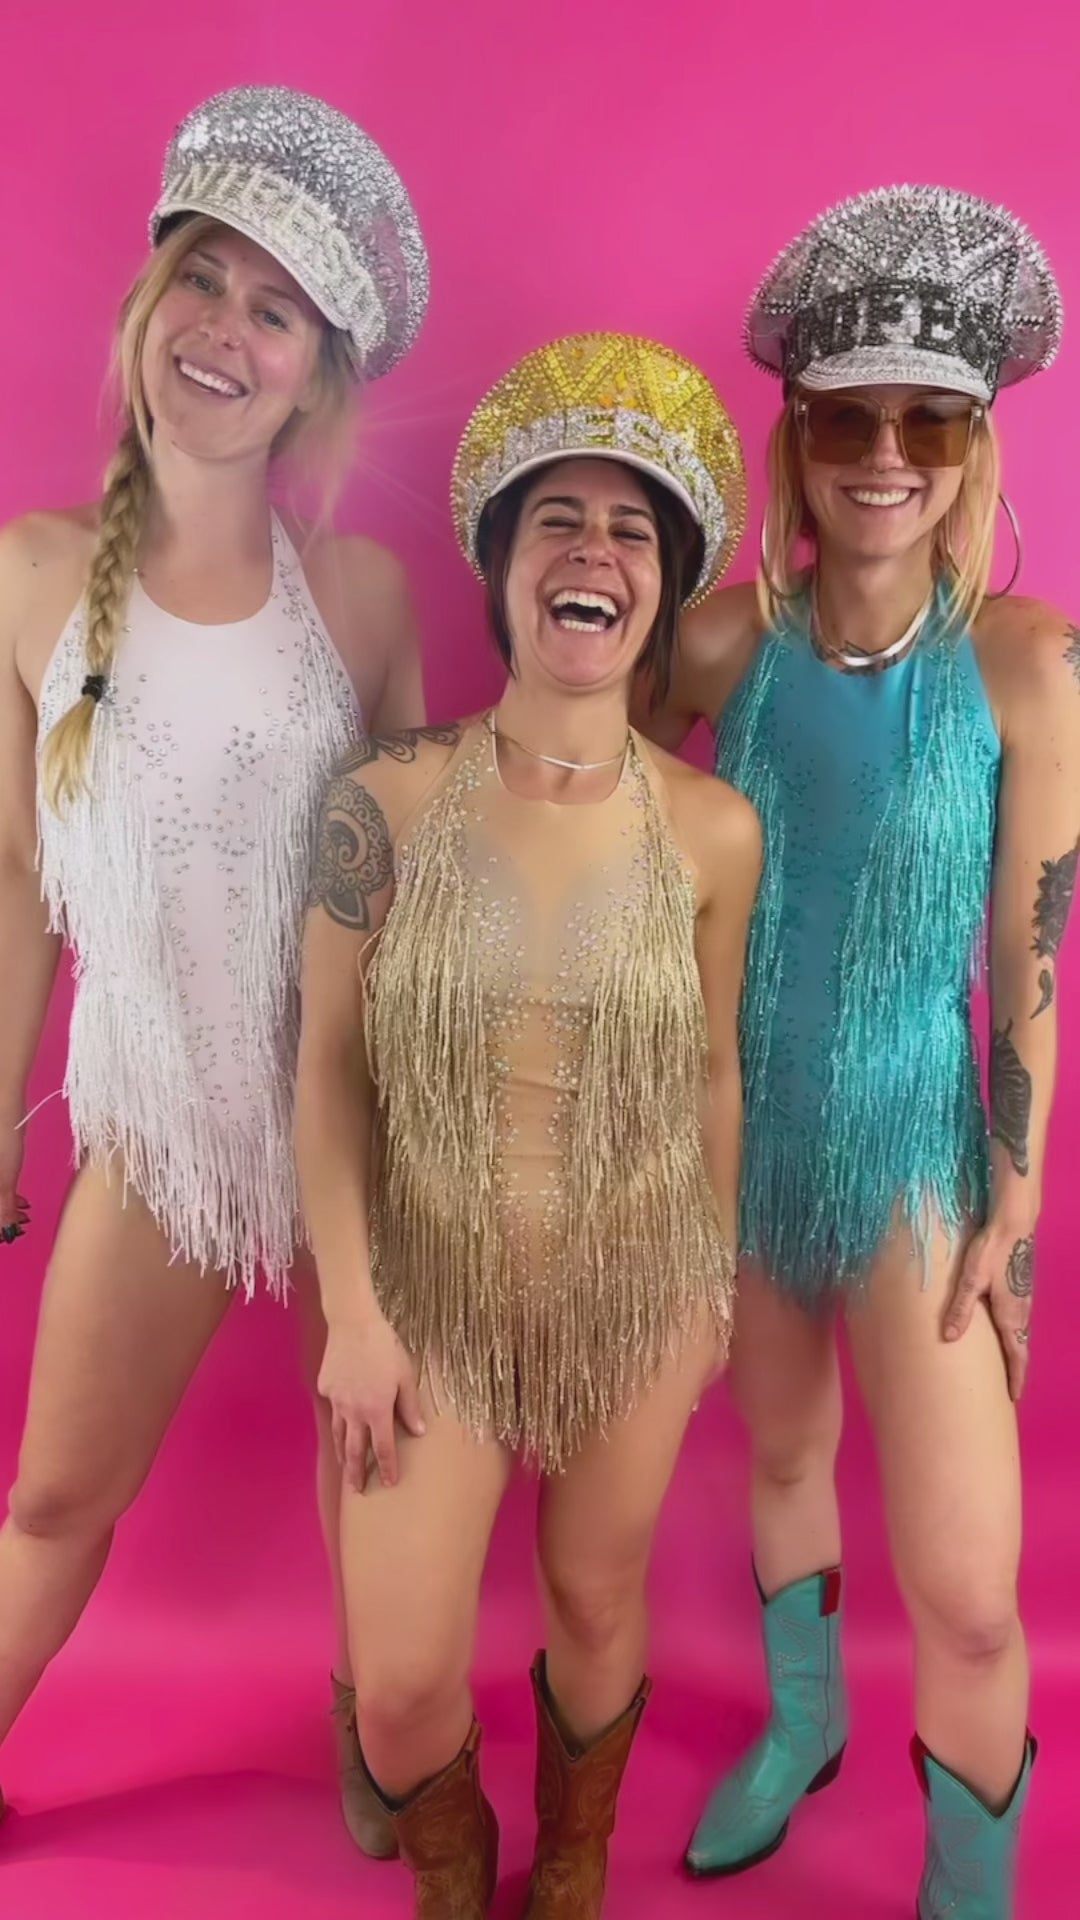 Taylor Rhinestone Bodysuit / Gold Tassel Festival Outfit / Cabaret New Years Eve Crystal Catsuit Burning Man / Dance Performer Leotard